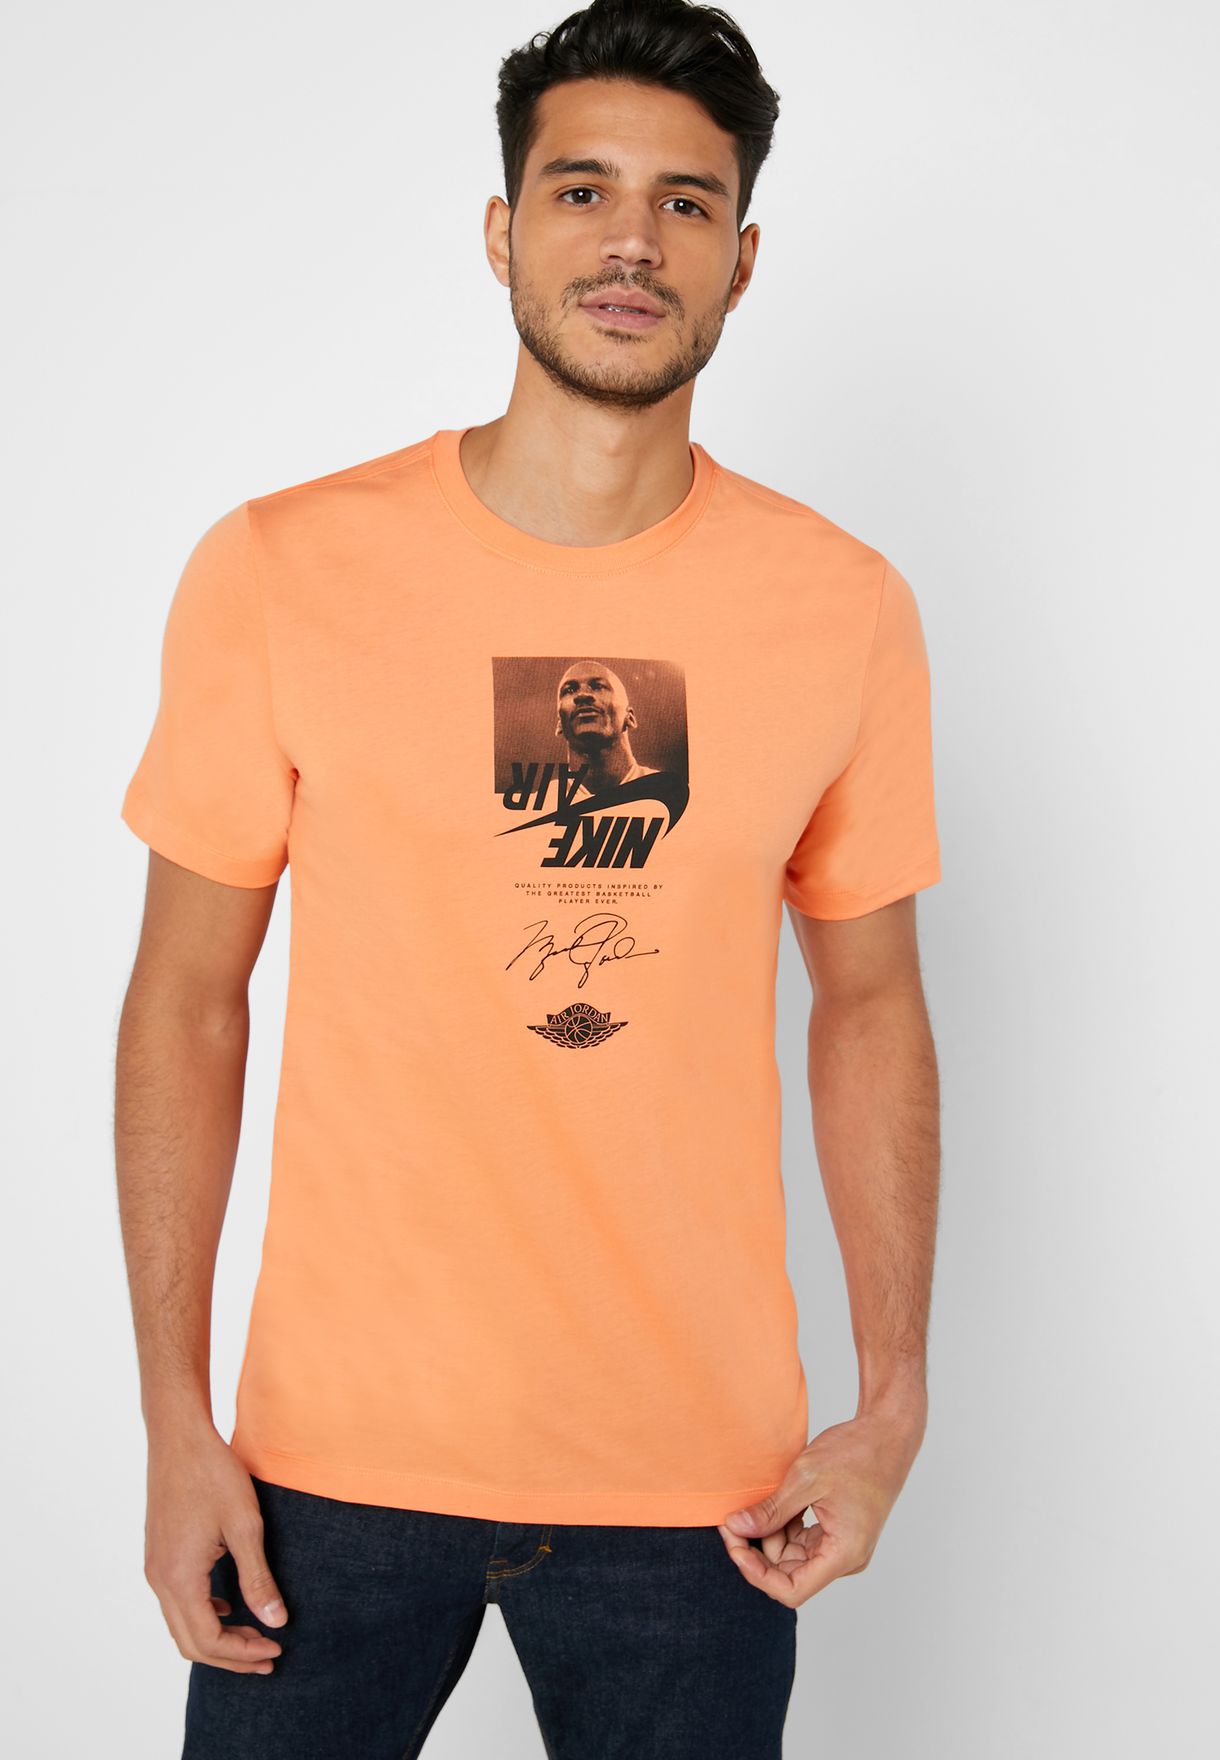 orange jordan t shirt